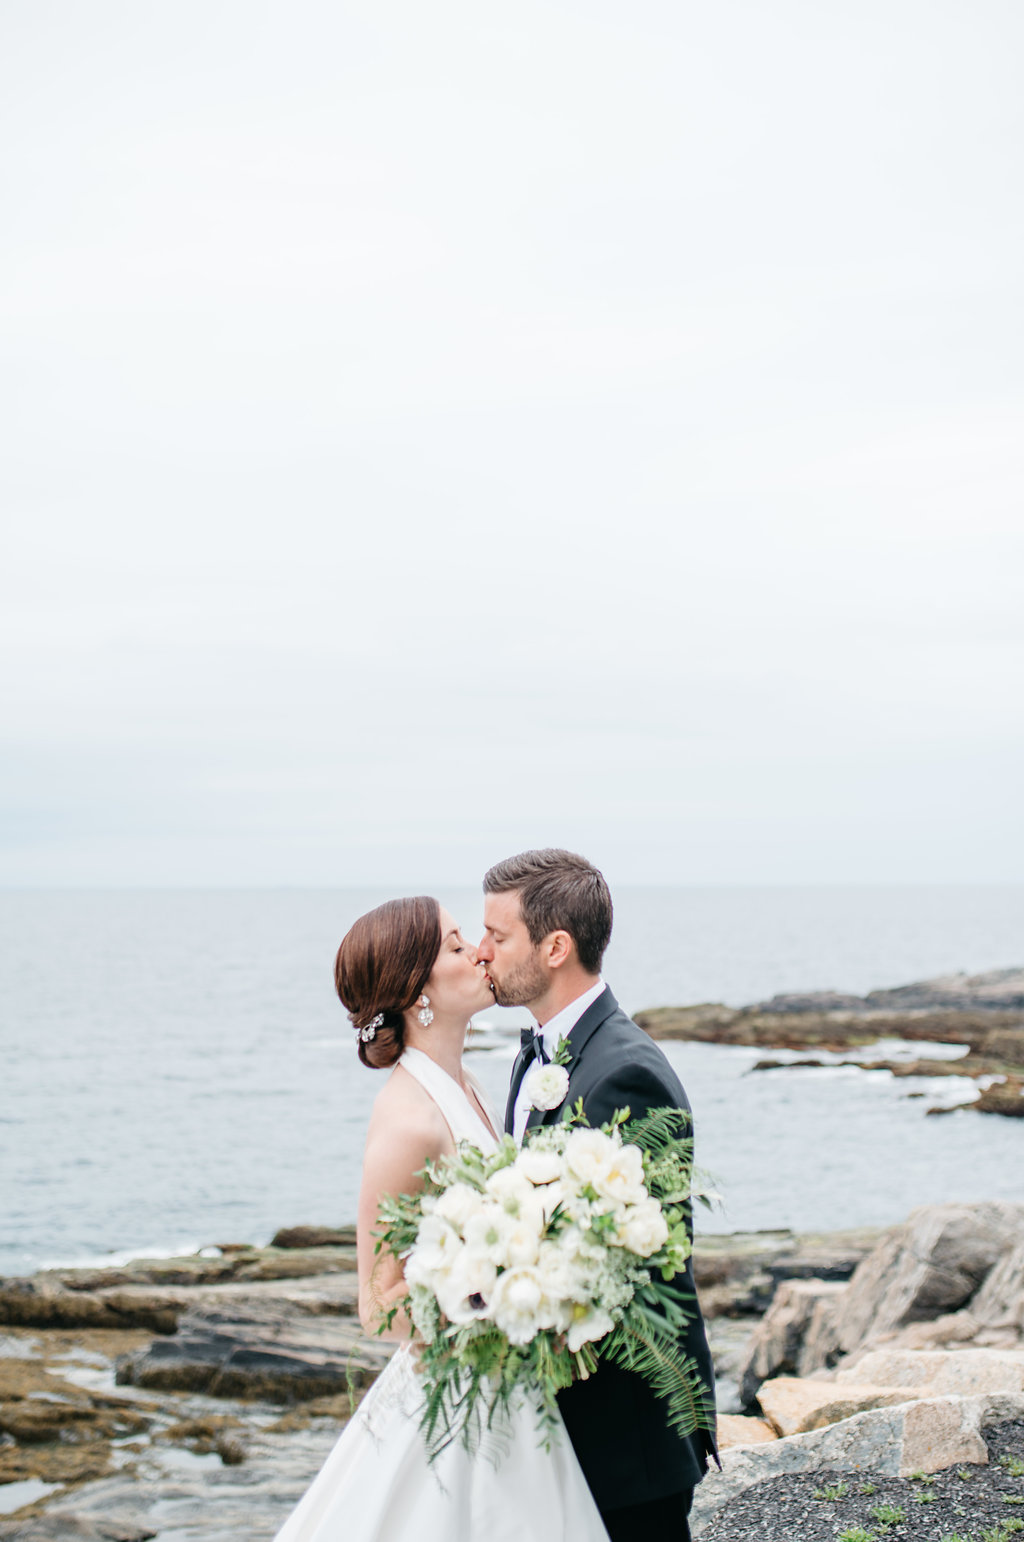 Rachel & Chad: A Cliff House Maine Wedding — Erika Aileen Photography